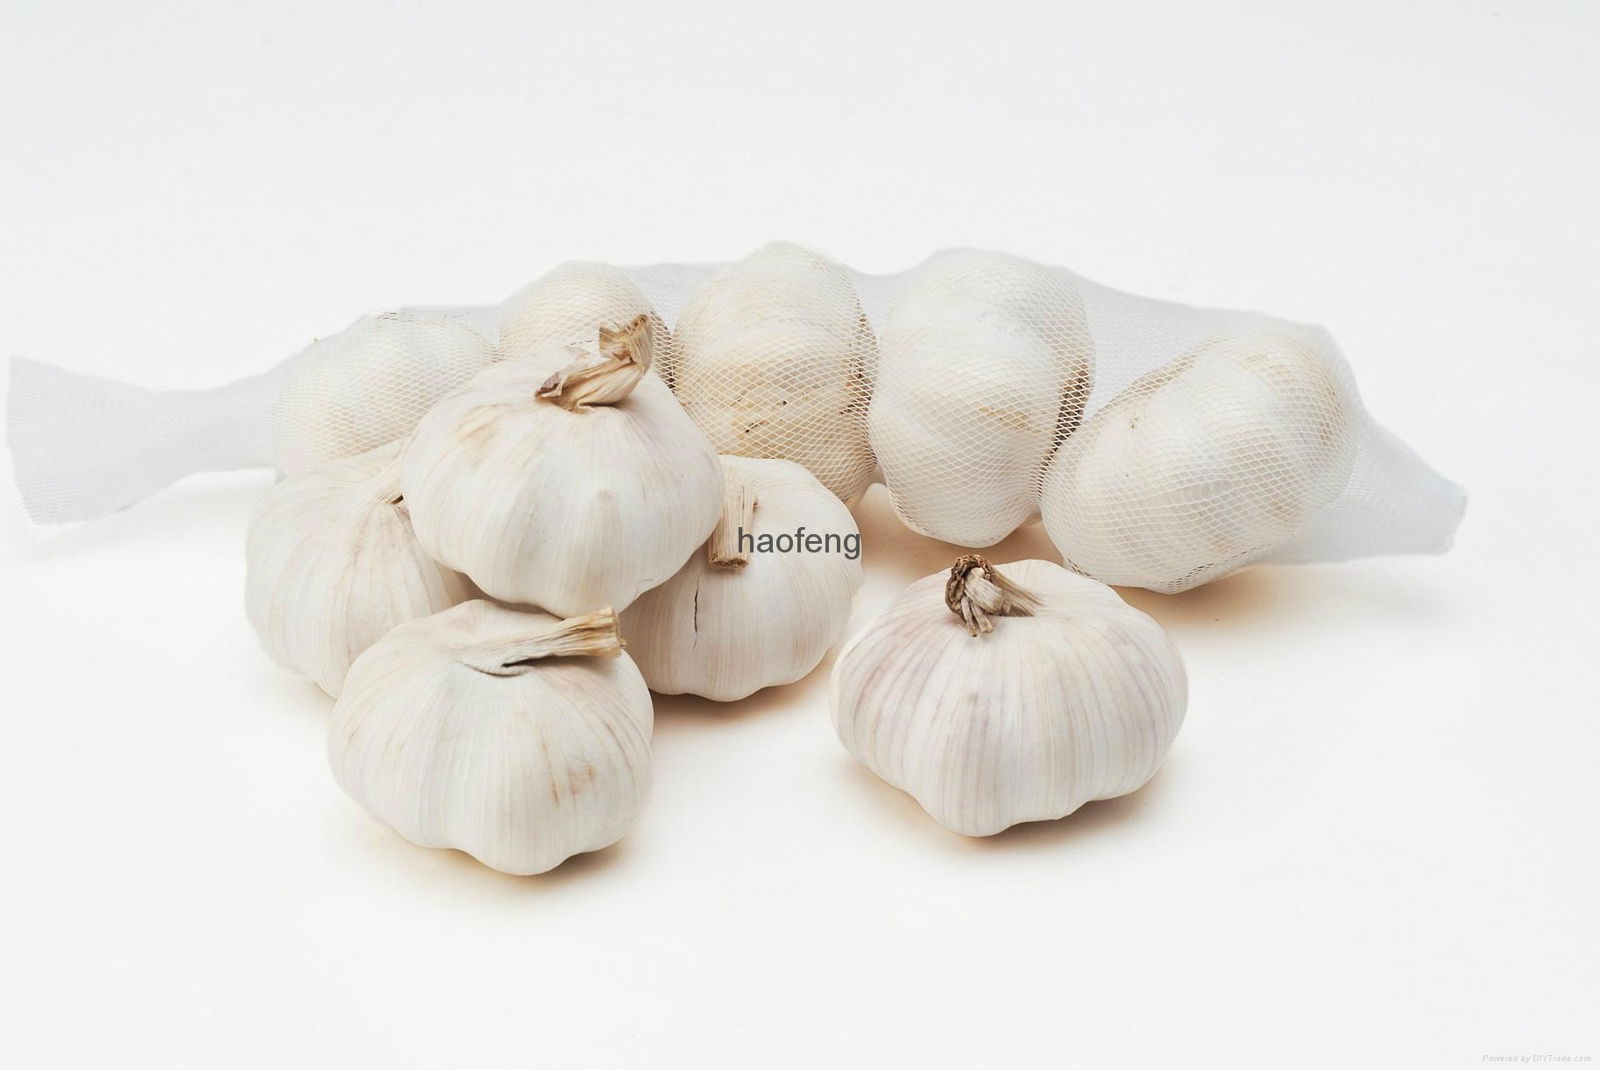 garlic 4